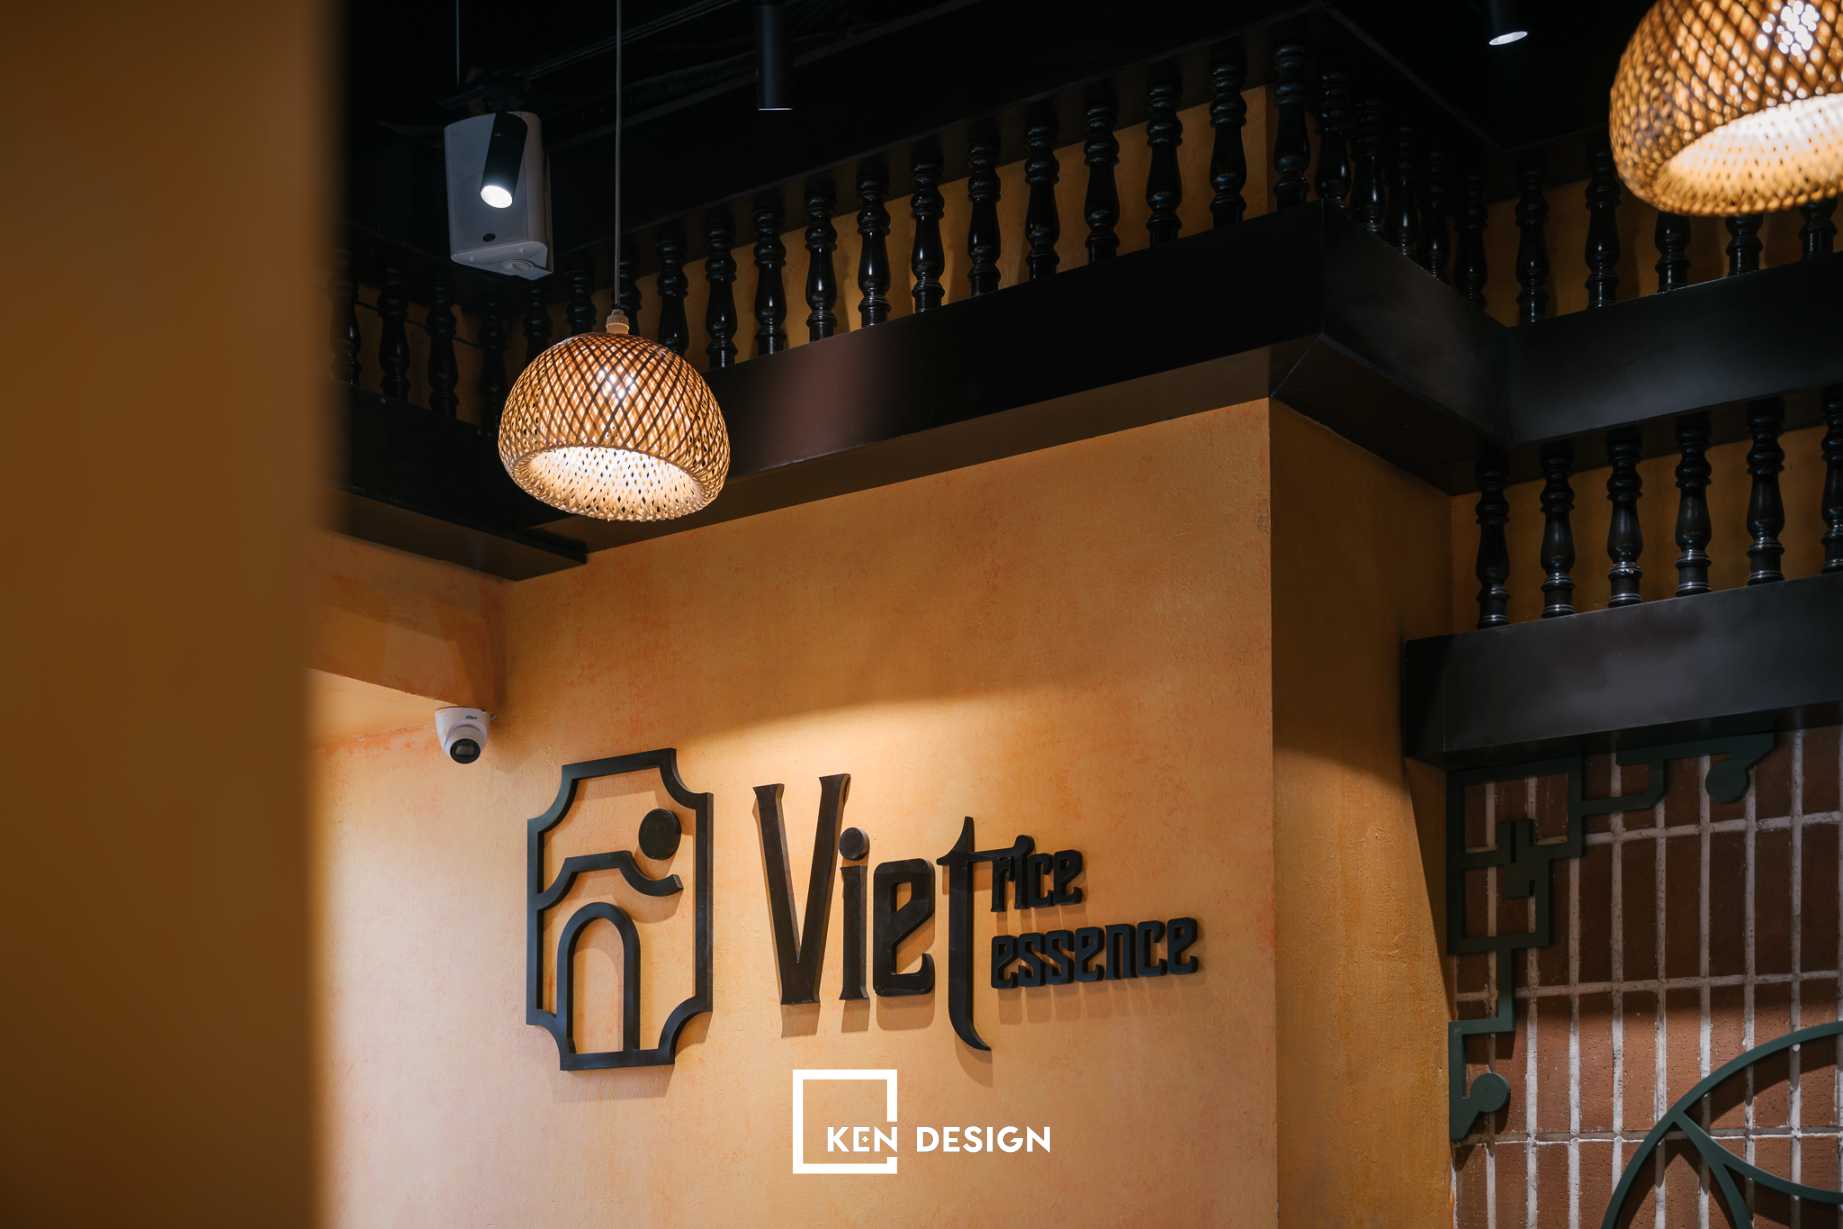 Construction of Viet Rice Essence Restaurant